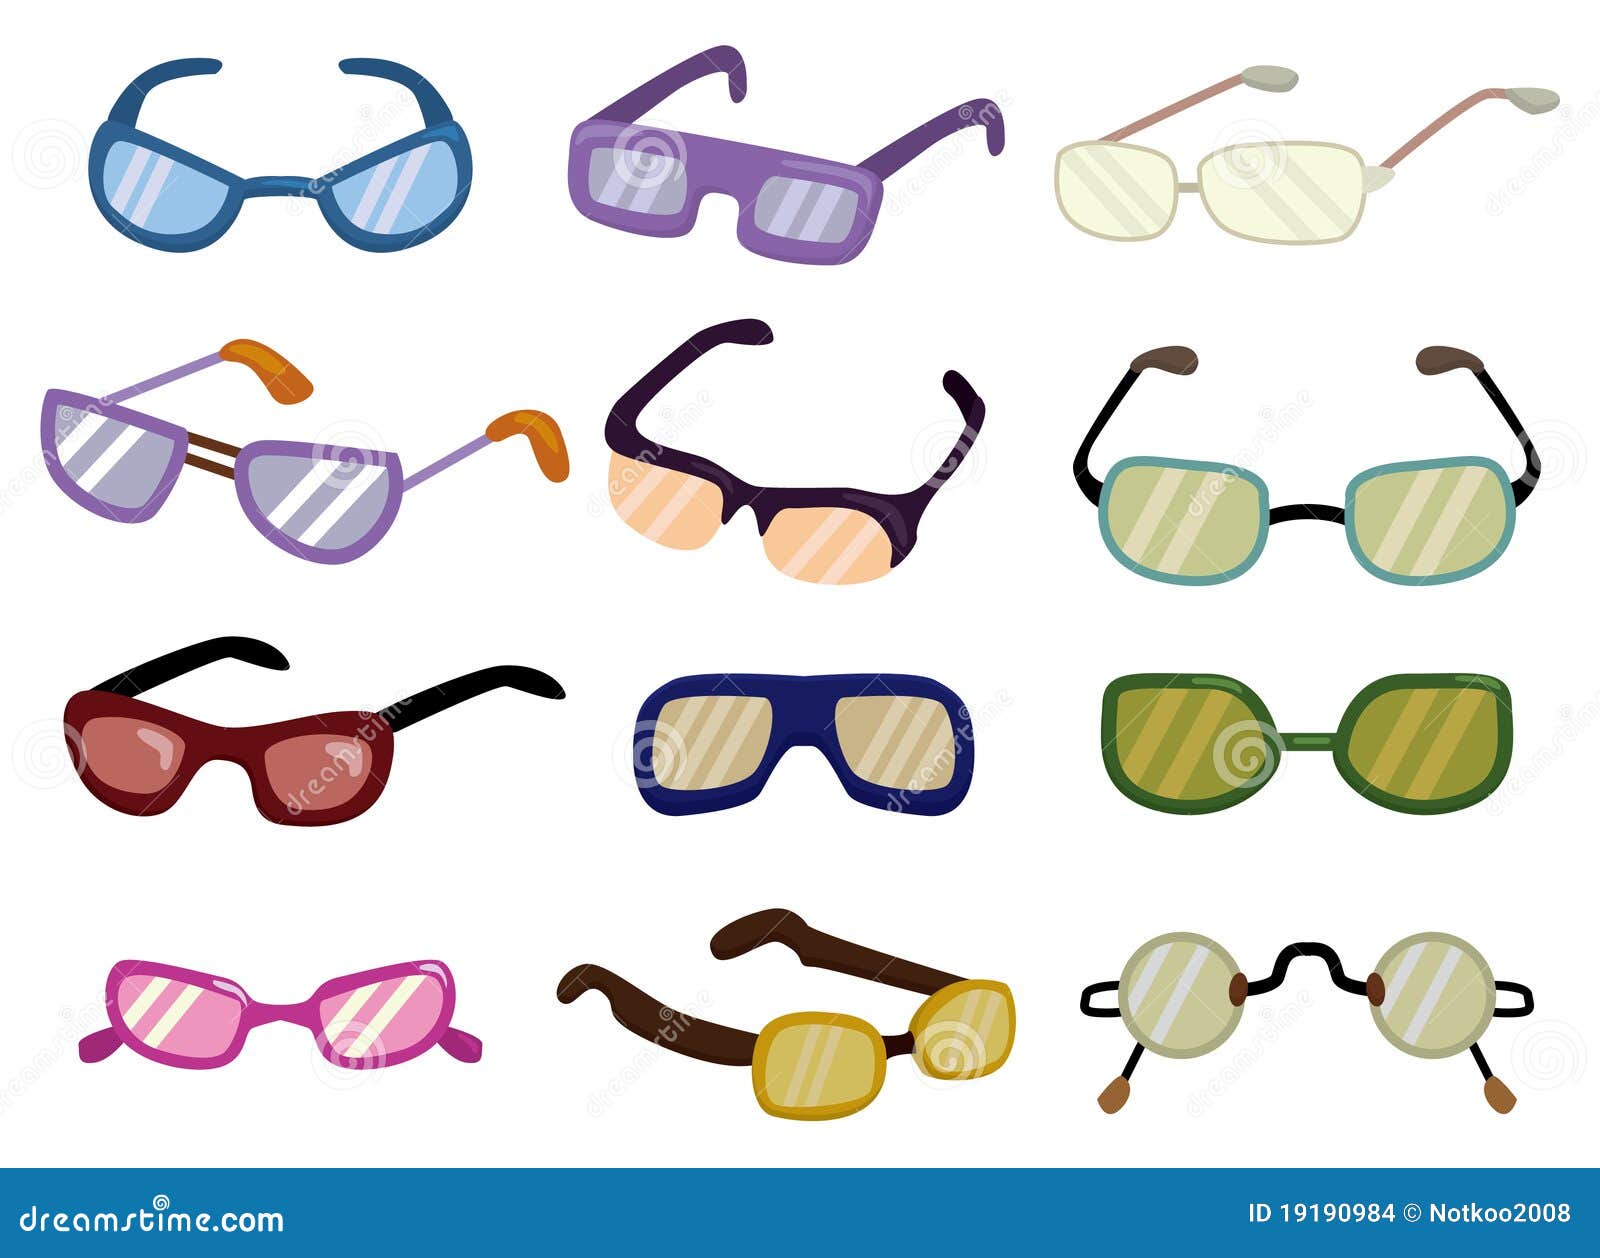 Cartoon Glasses icon stock vector. Illustration of glasses - 19190984